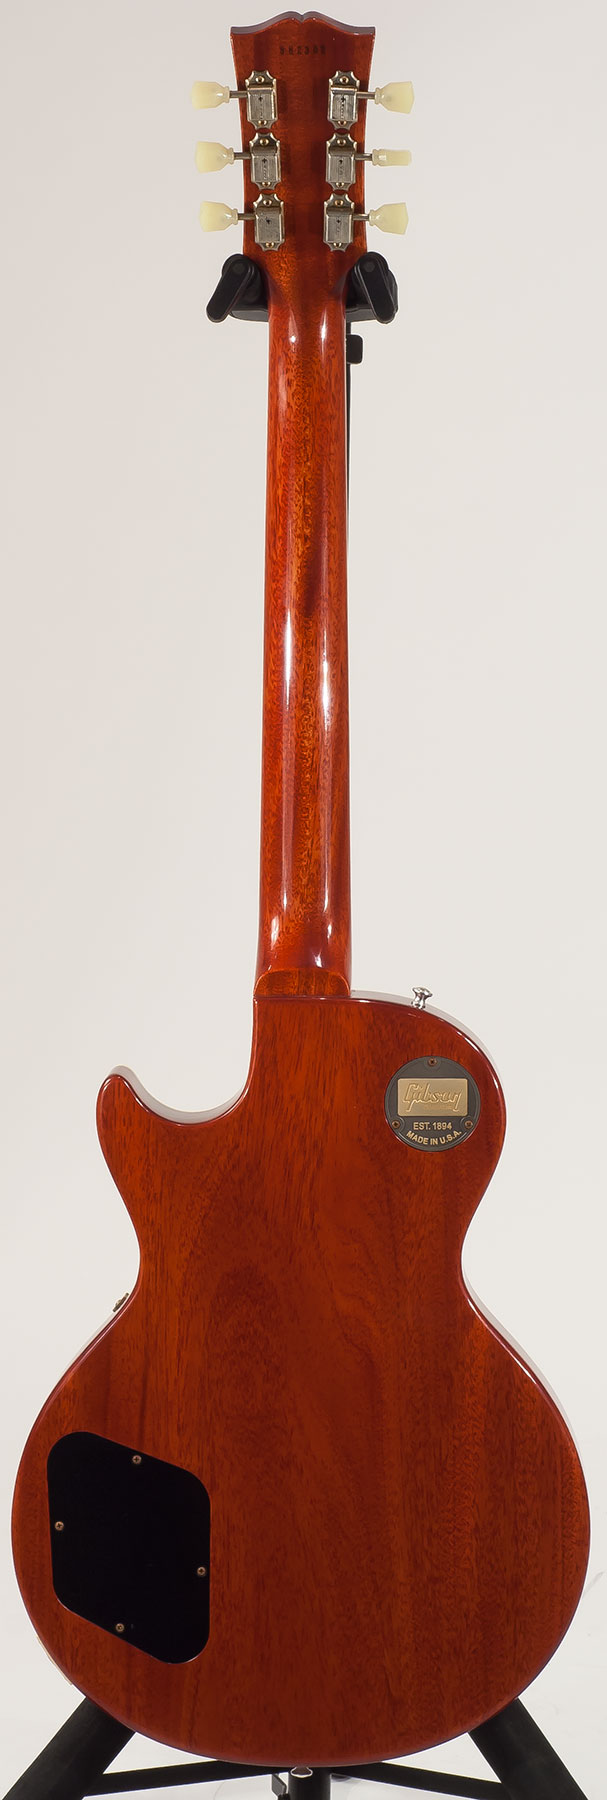 Gibson Custom Shop Les Paul Standard 1959 2h Ht Rw - Vos Dark Bourbon Fade - Single cut electric guitar - Variation 1